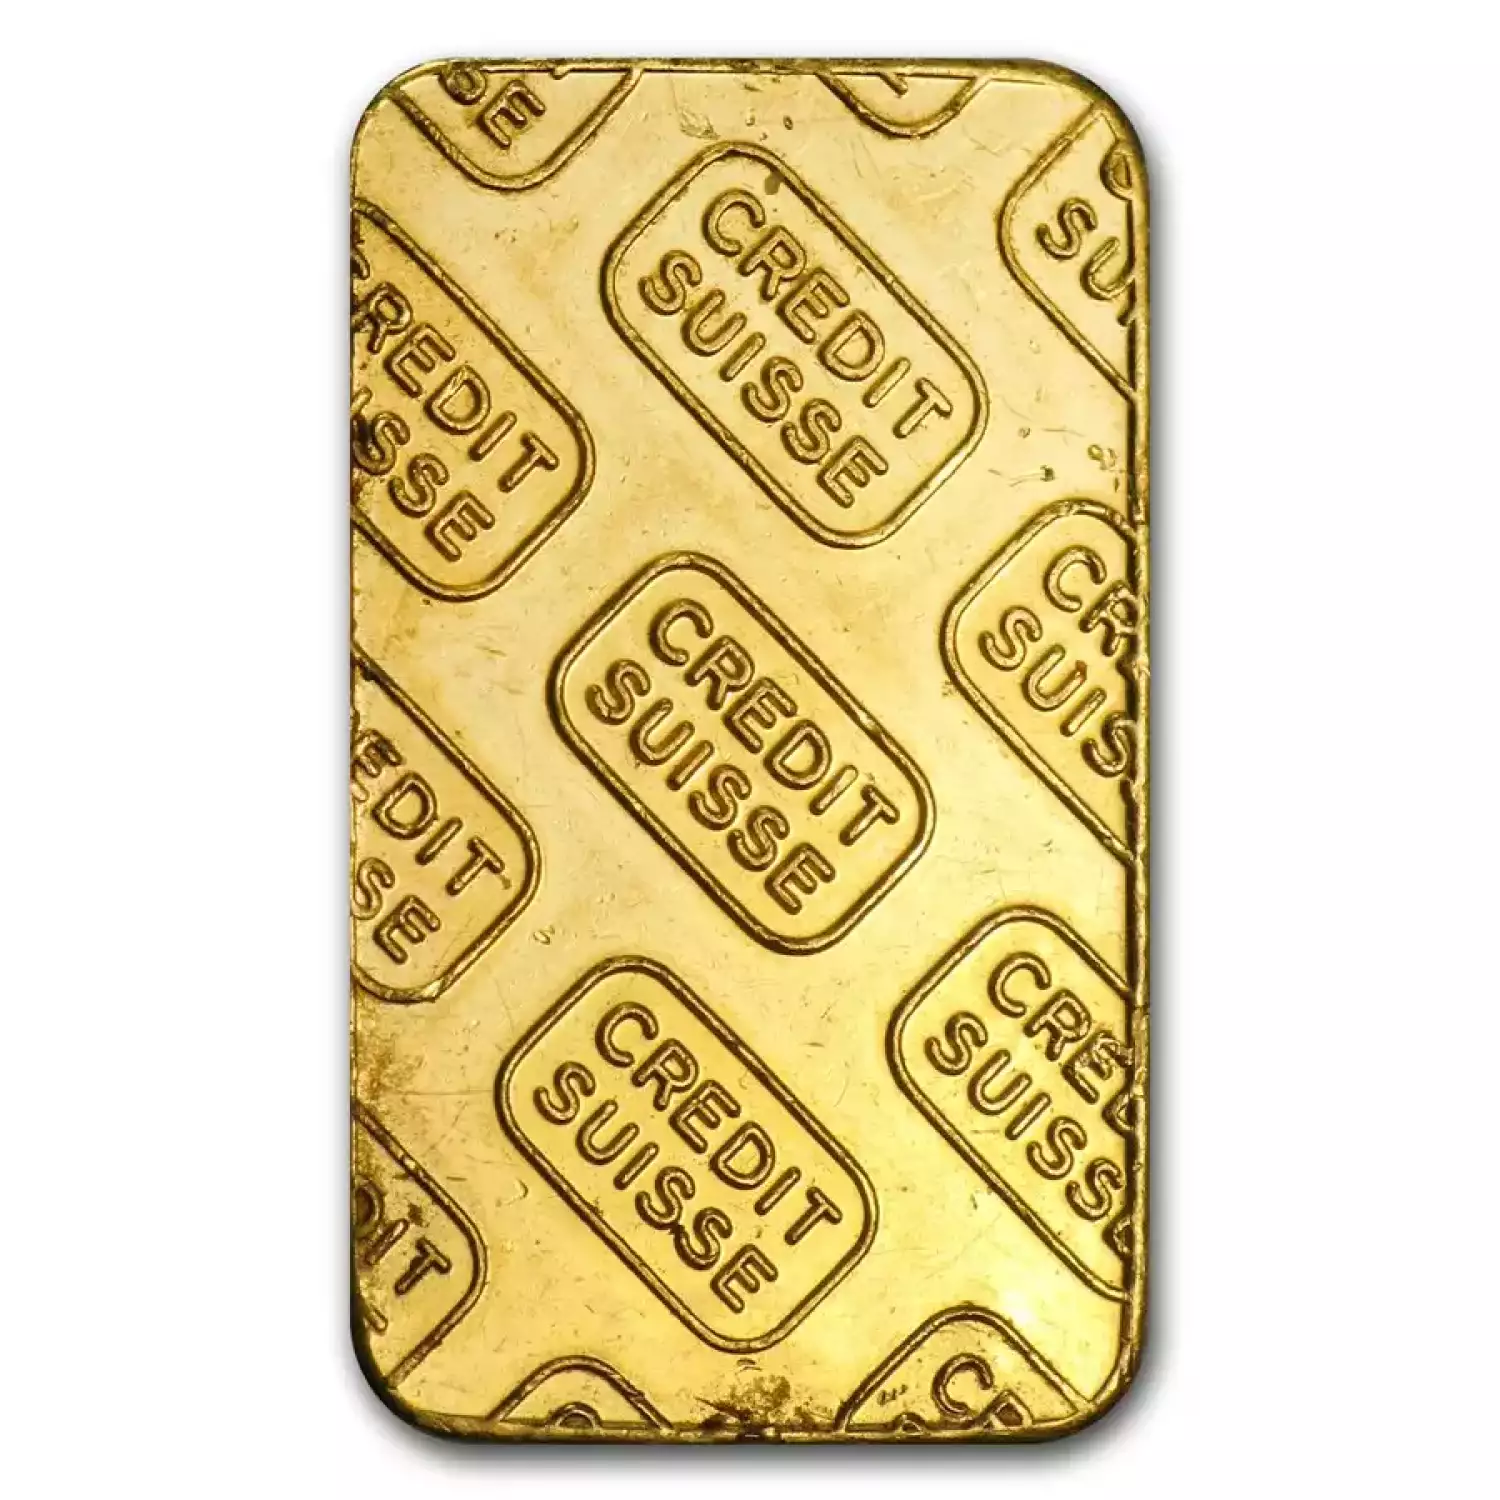 5 gram Gold Bar - Secondary Market (2)